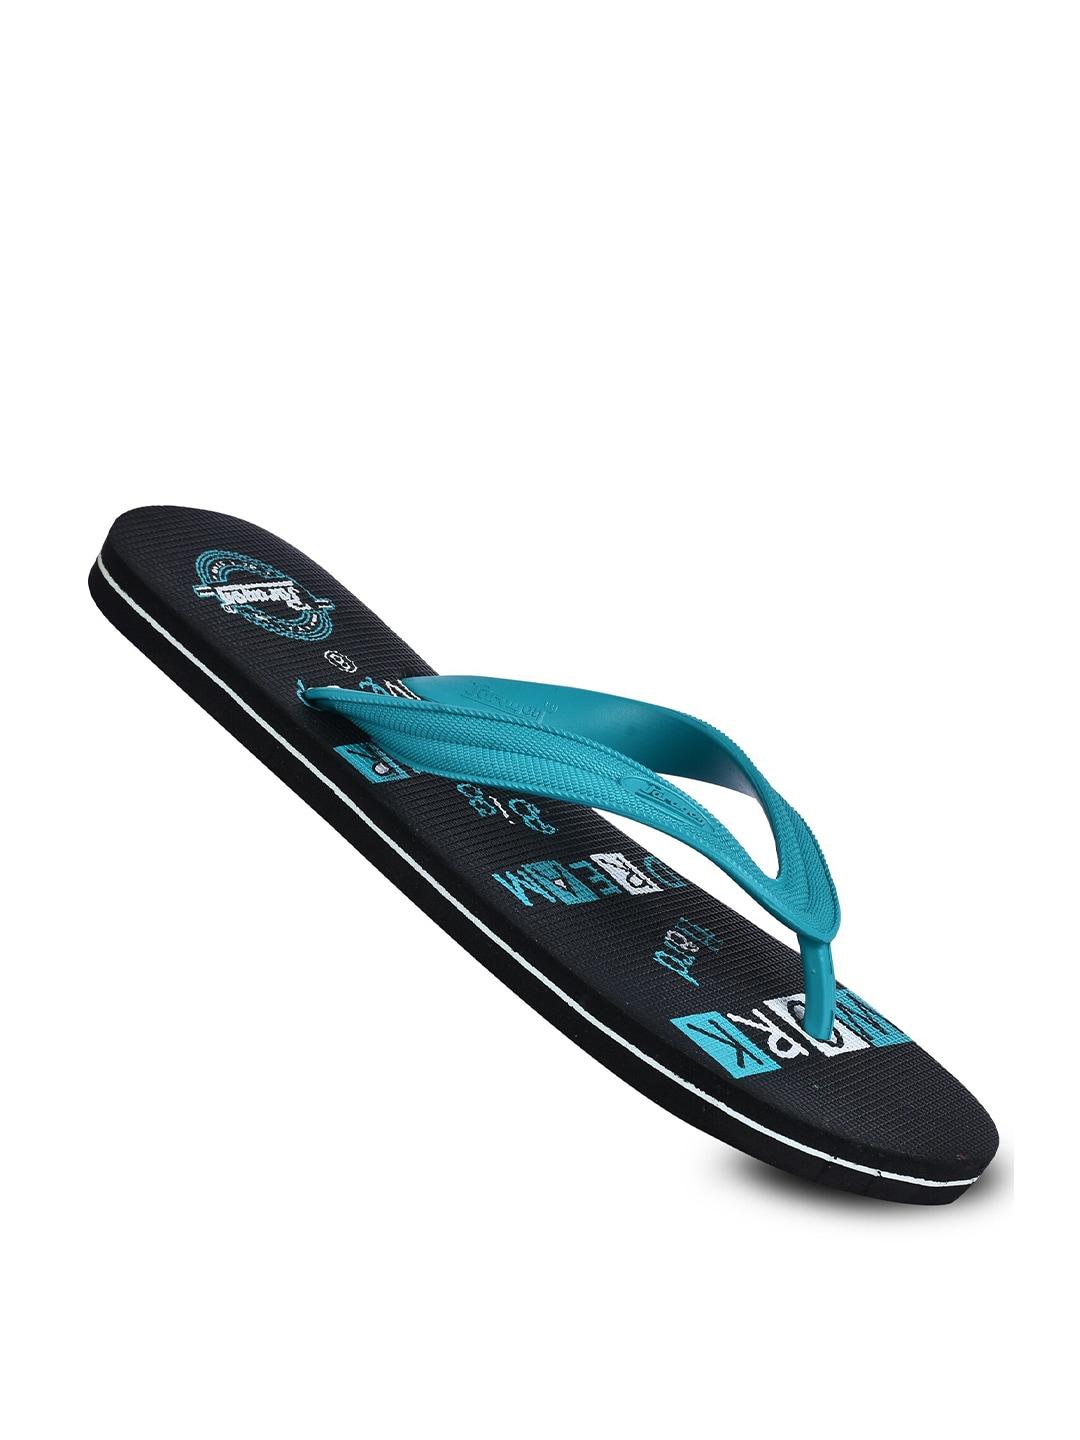 Paragon Men Blue & Black Printed Rubber Thong Flip-Flops